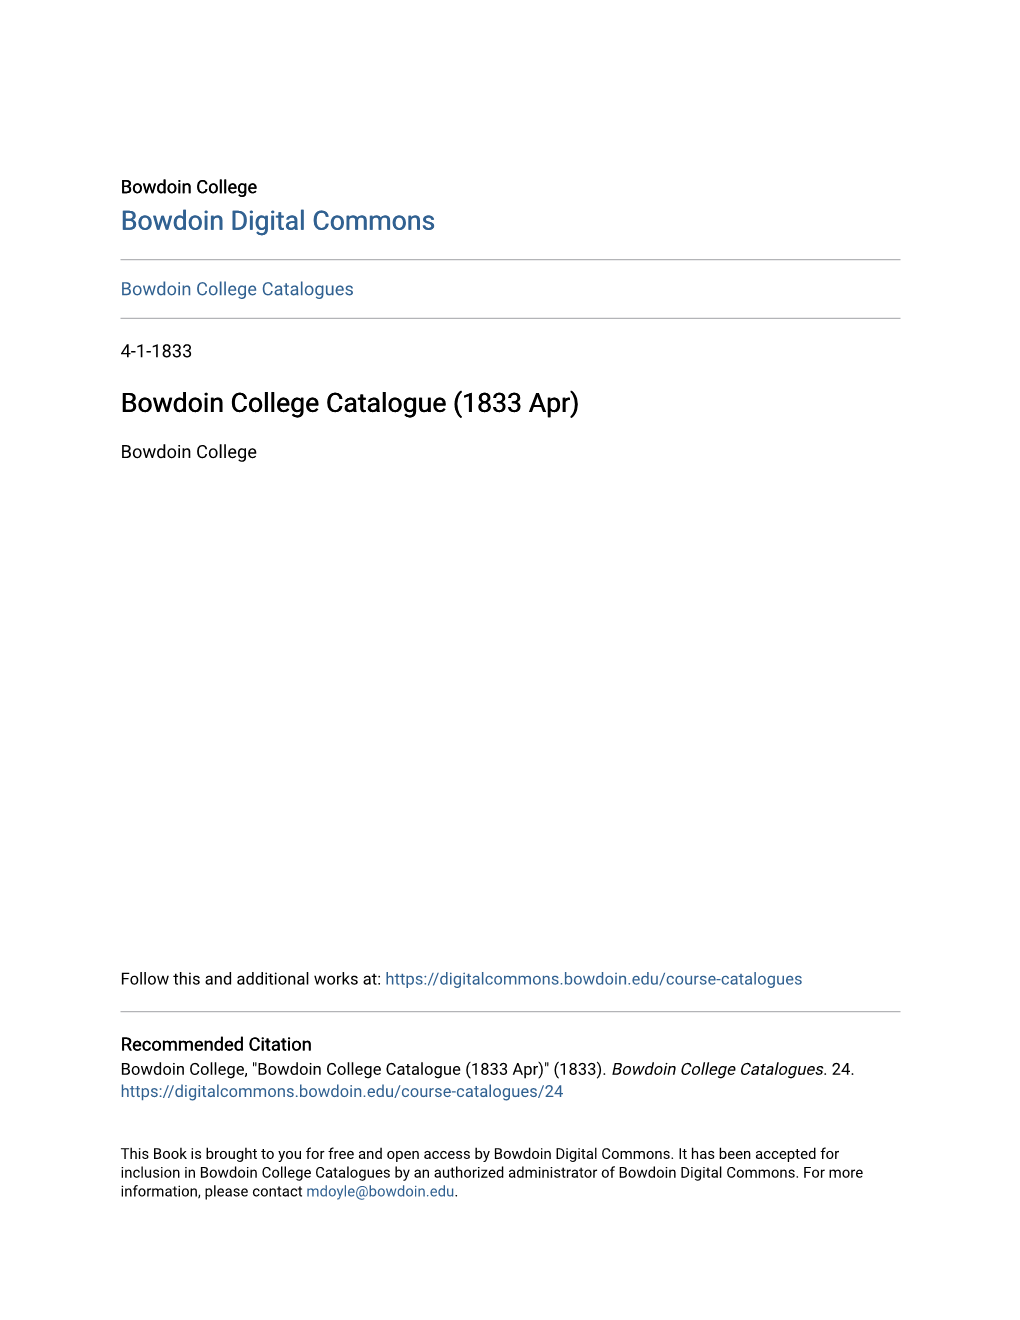 Bowdoin College Catalogue (1833 Apr)